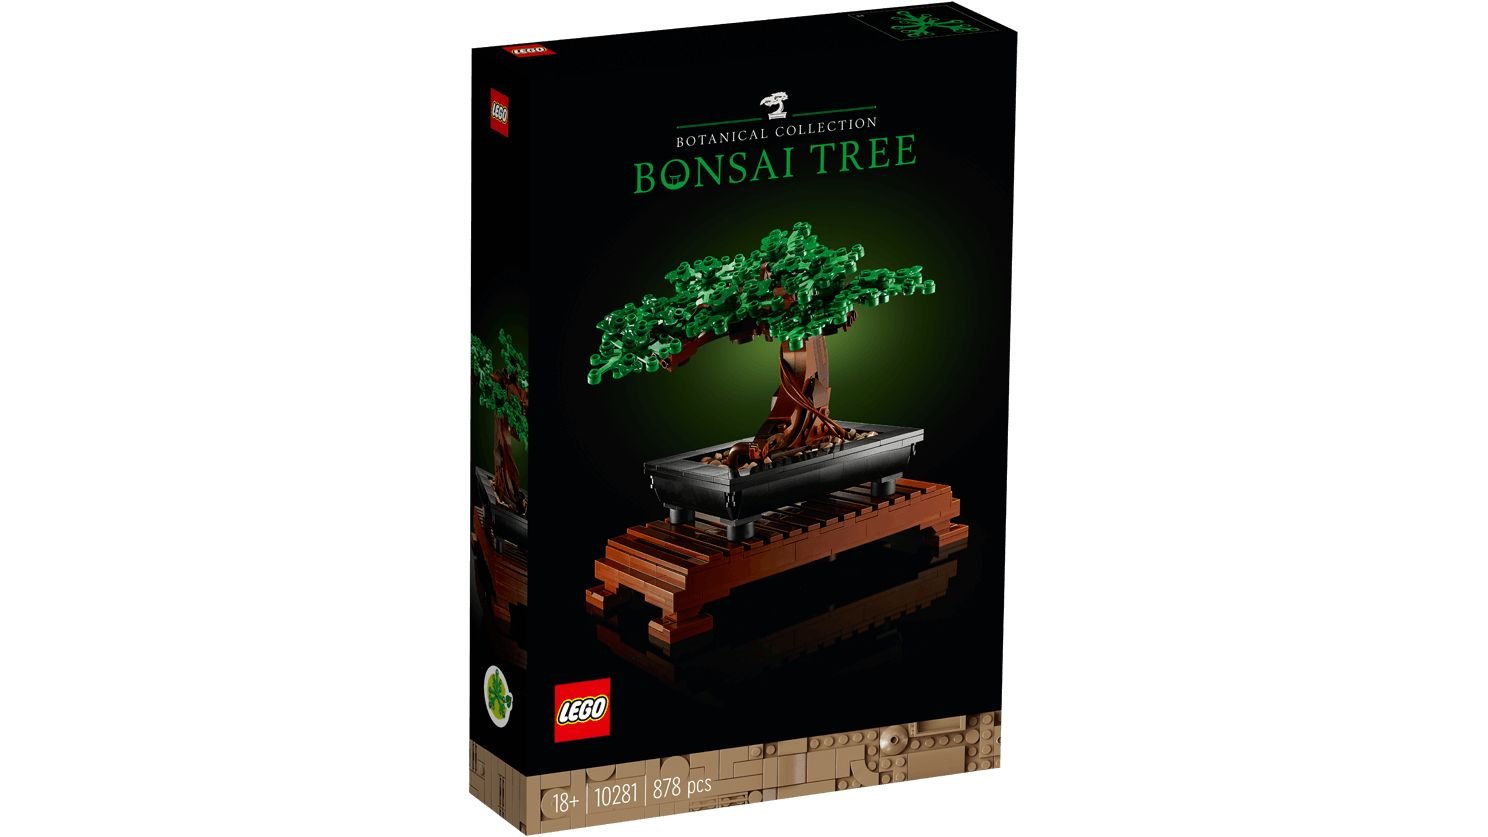 LEGO Advanced Models 10281 Bonsai Baum LEGO_10281_Box1_v29_1488.jpg